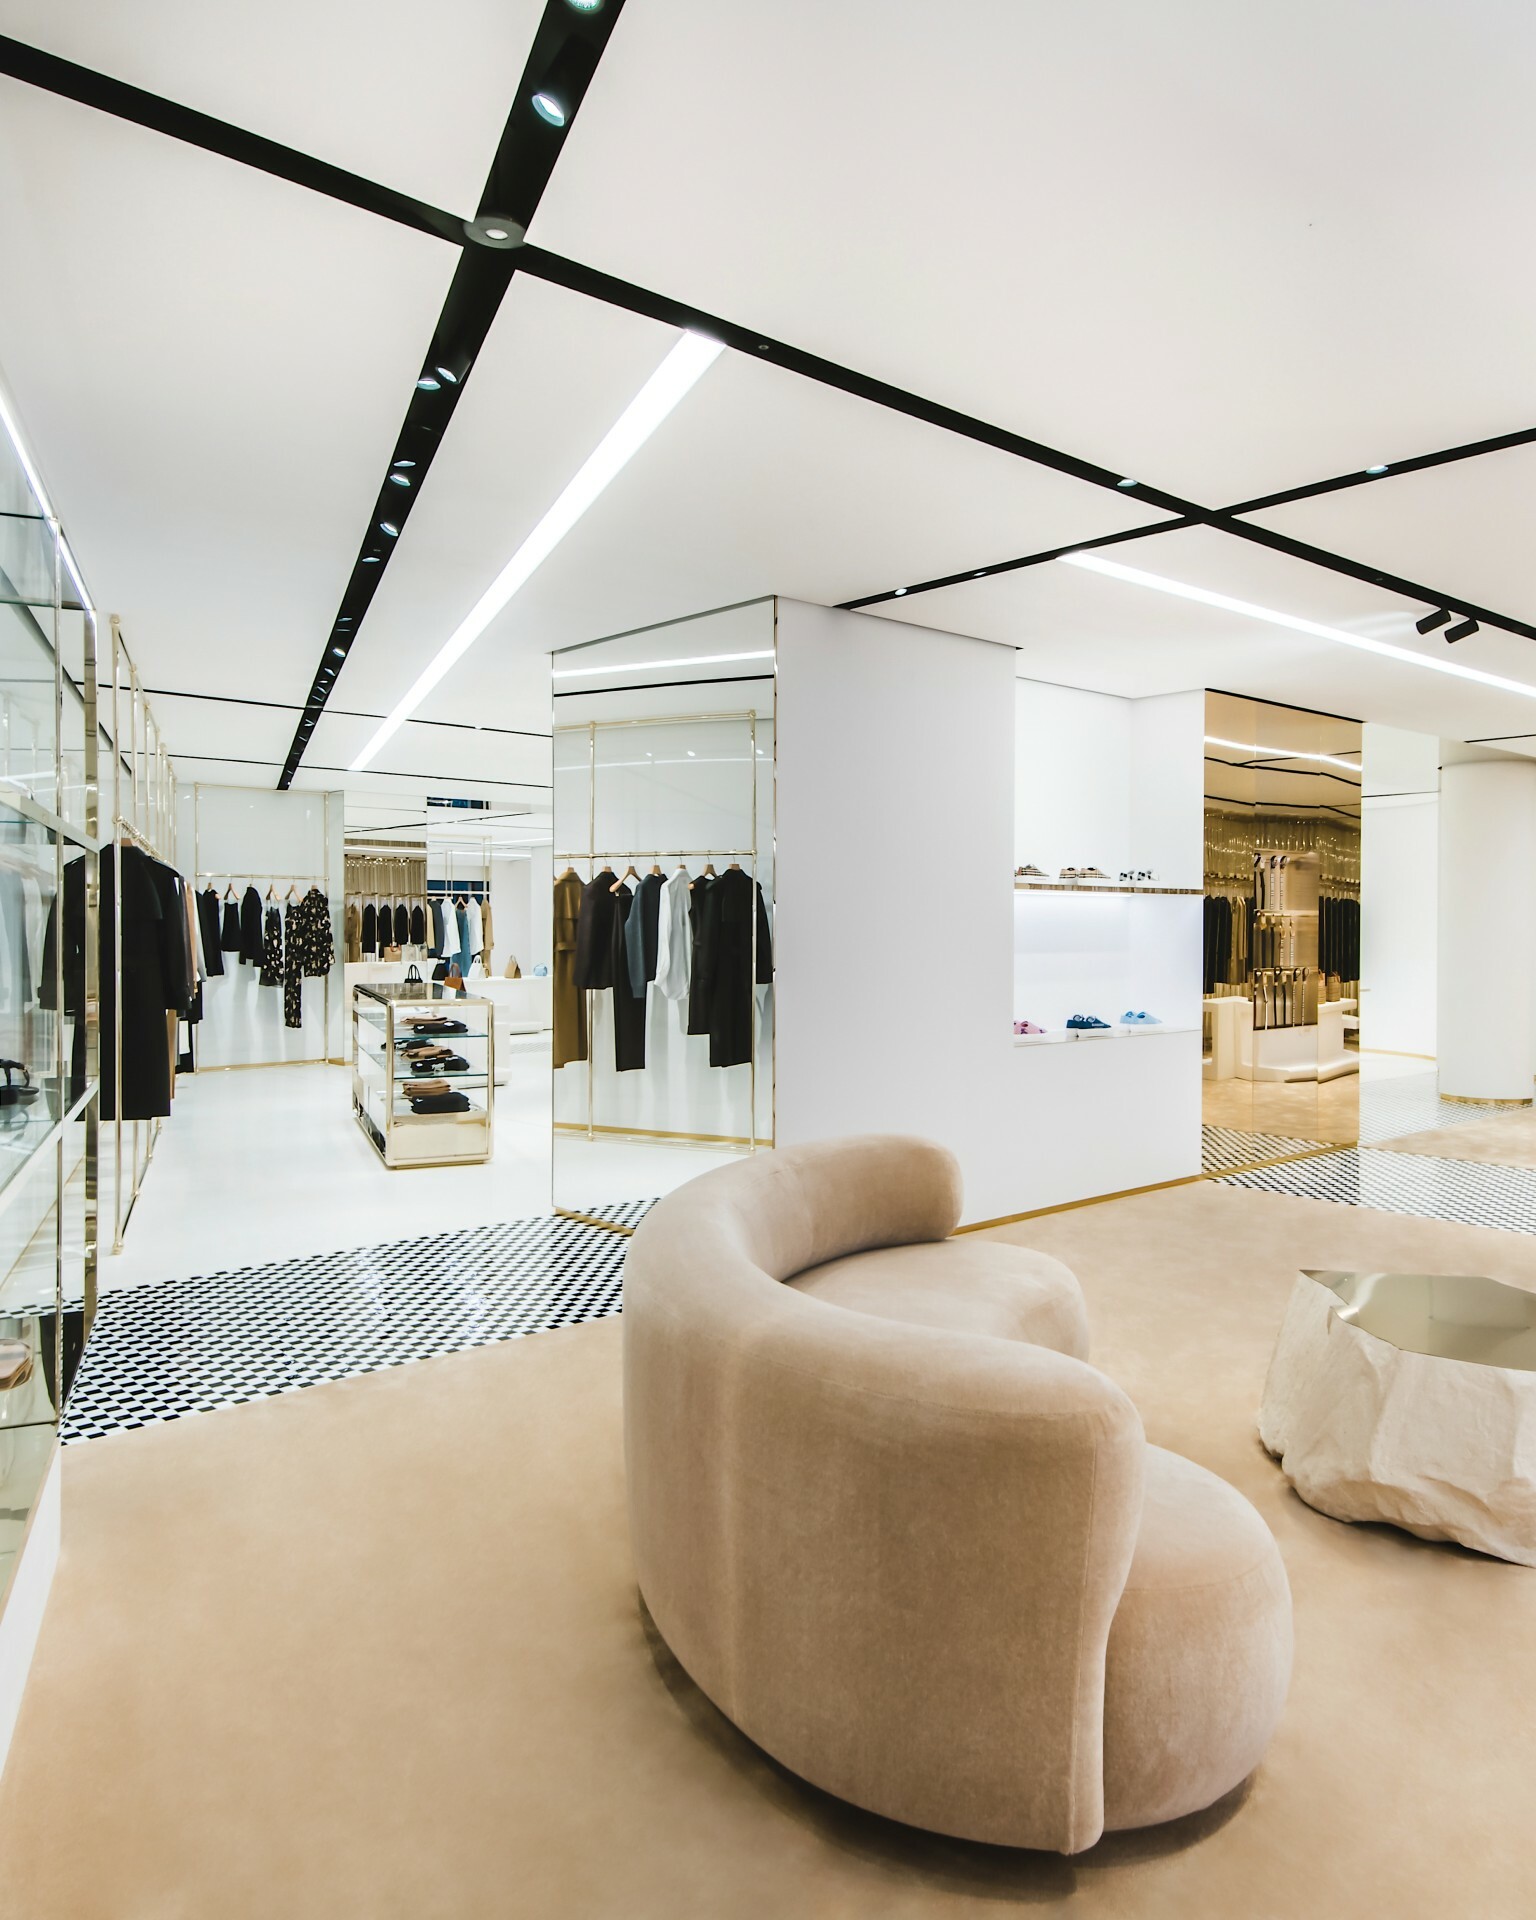 Burberry's reborn New Bond Street store reopens